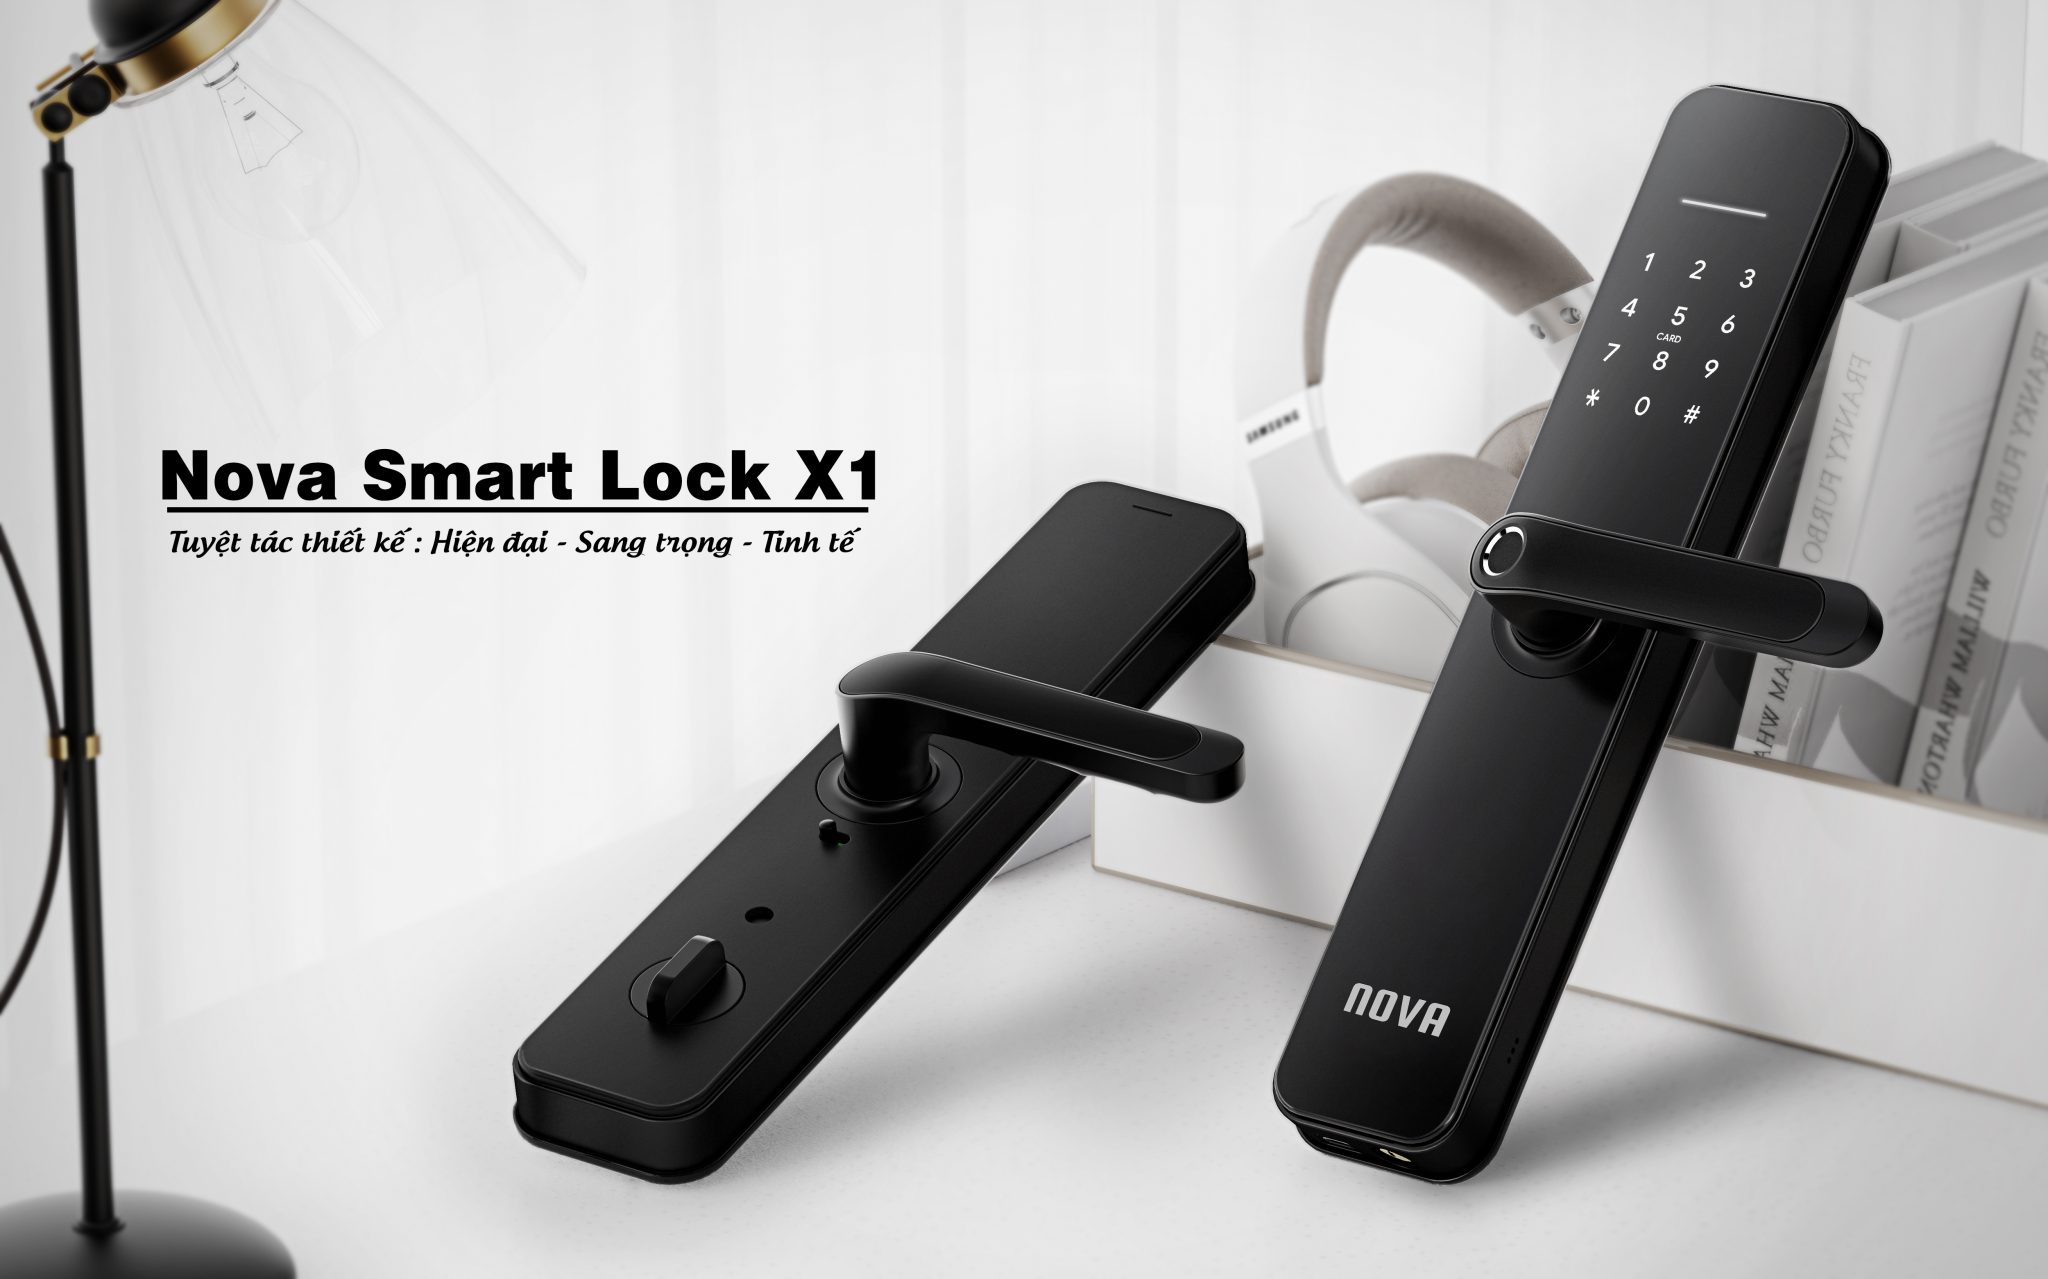 Khóa Vân Tay Dưới 7 Triệu Nova Smart Lock X1